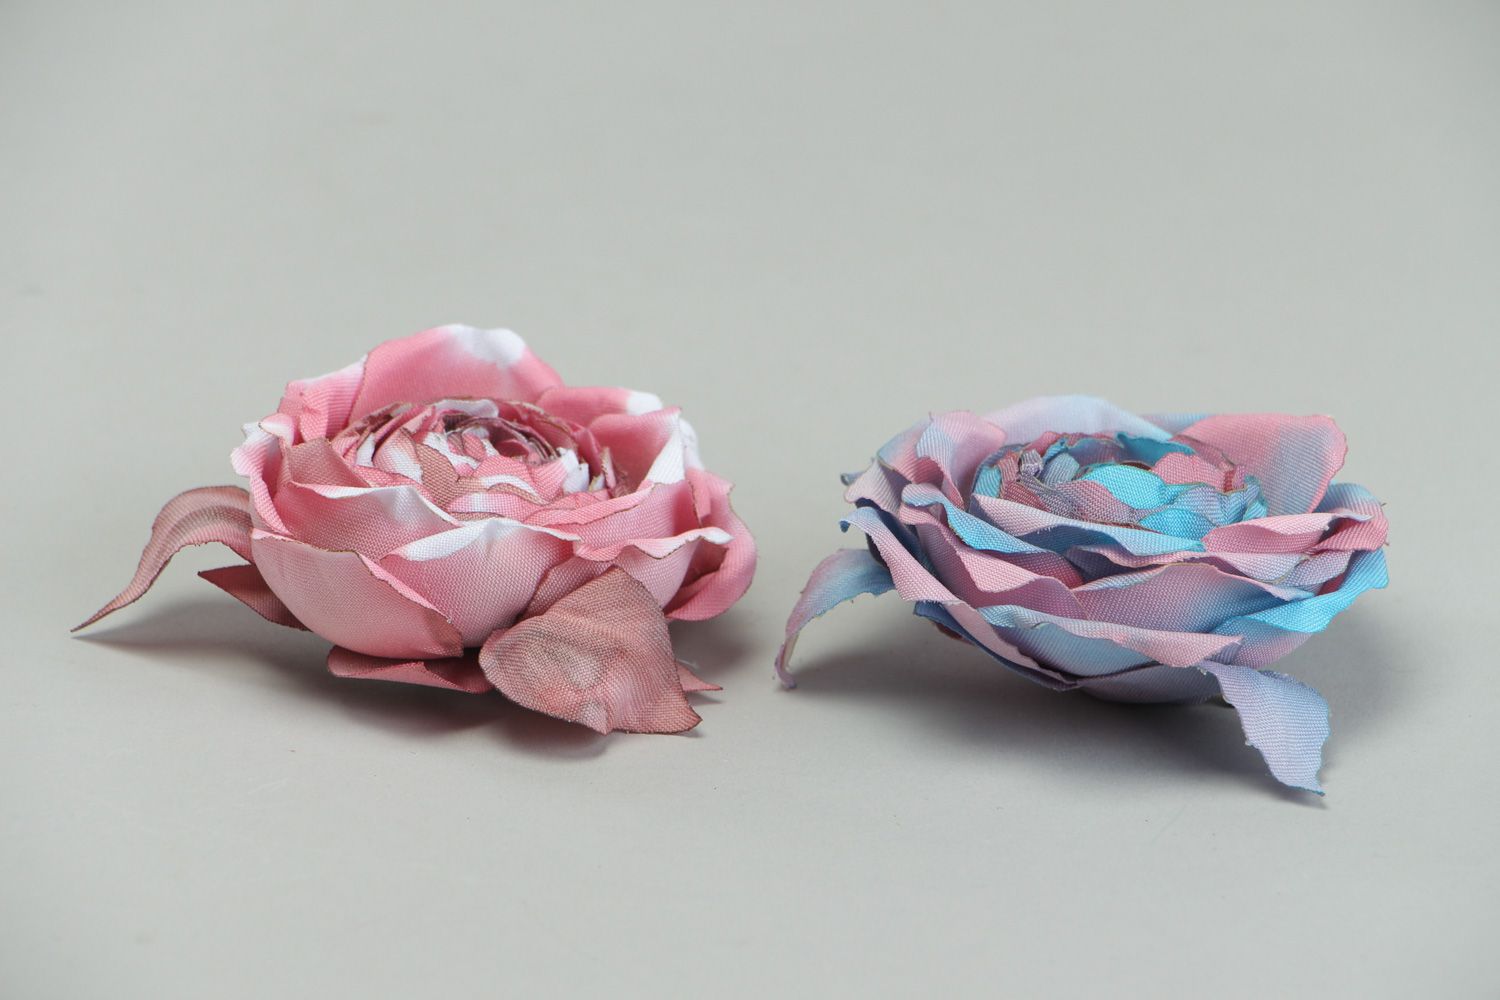 Broches en tissu faites main de gabardine originales rose et bleue 2 pièces photo 2